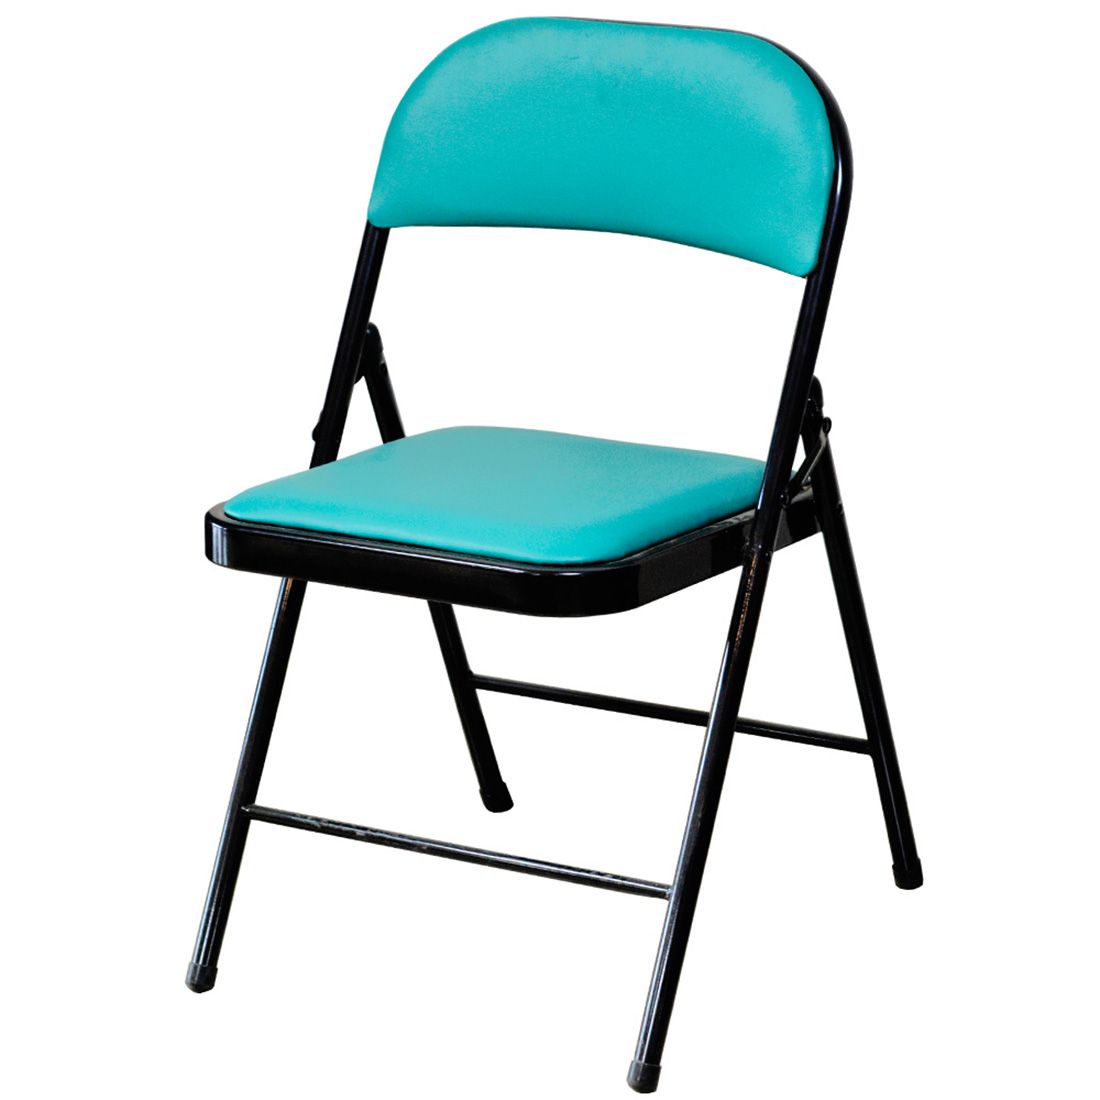 Eros Metal Folding chair - Buy Eros Metal Folding chair ...